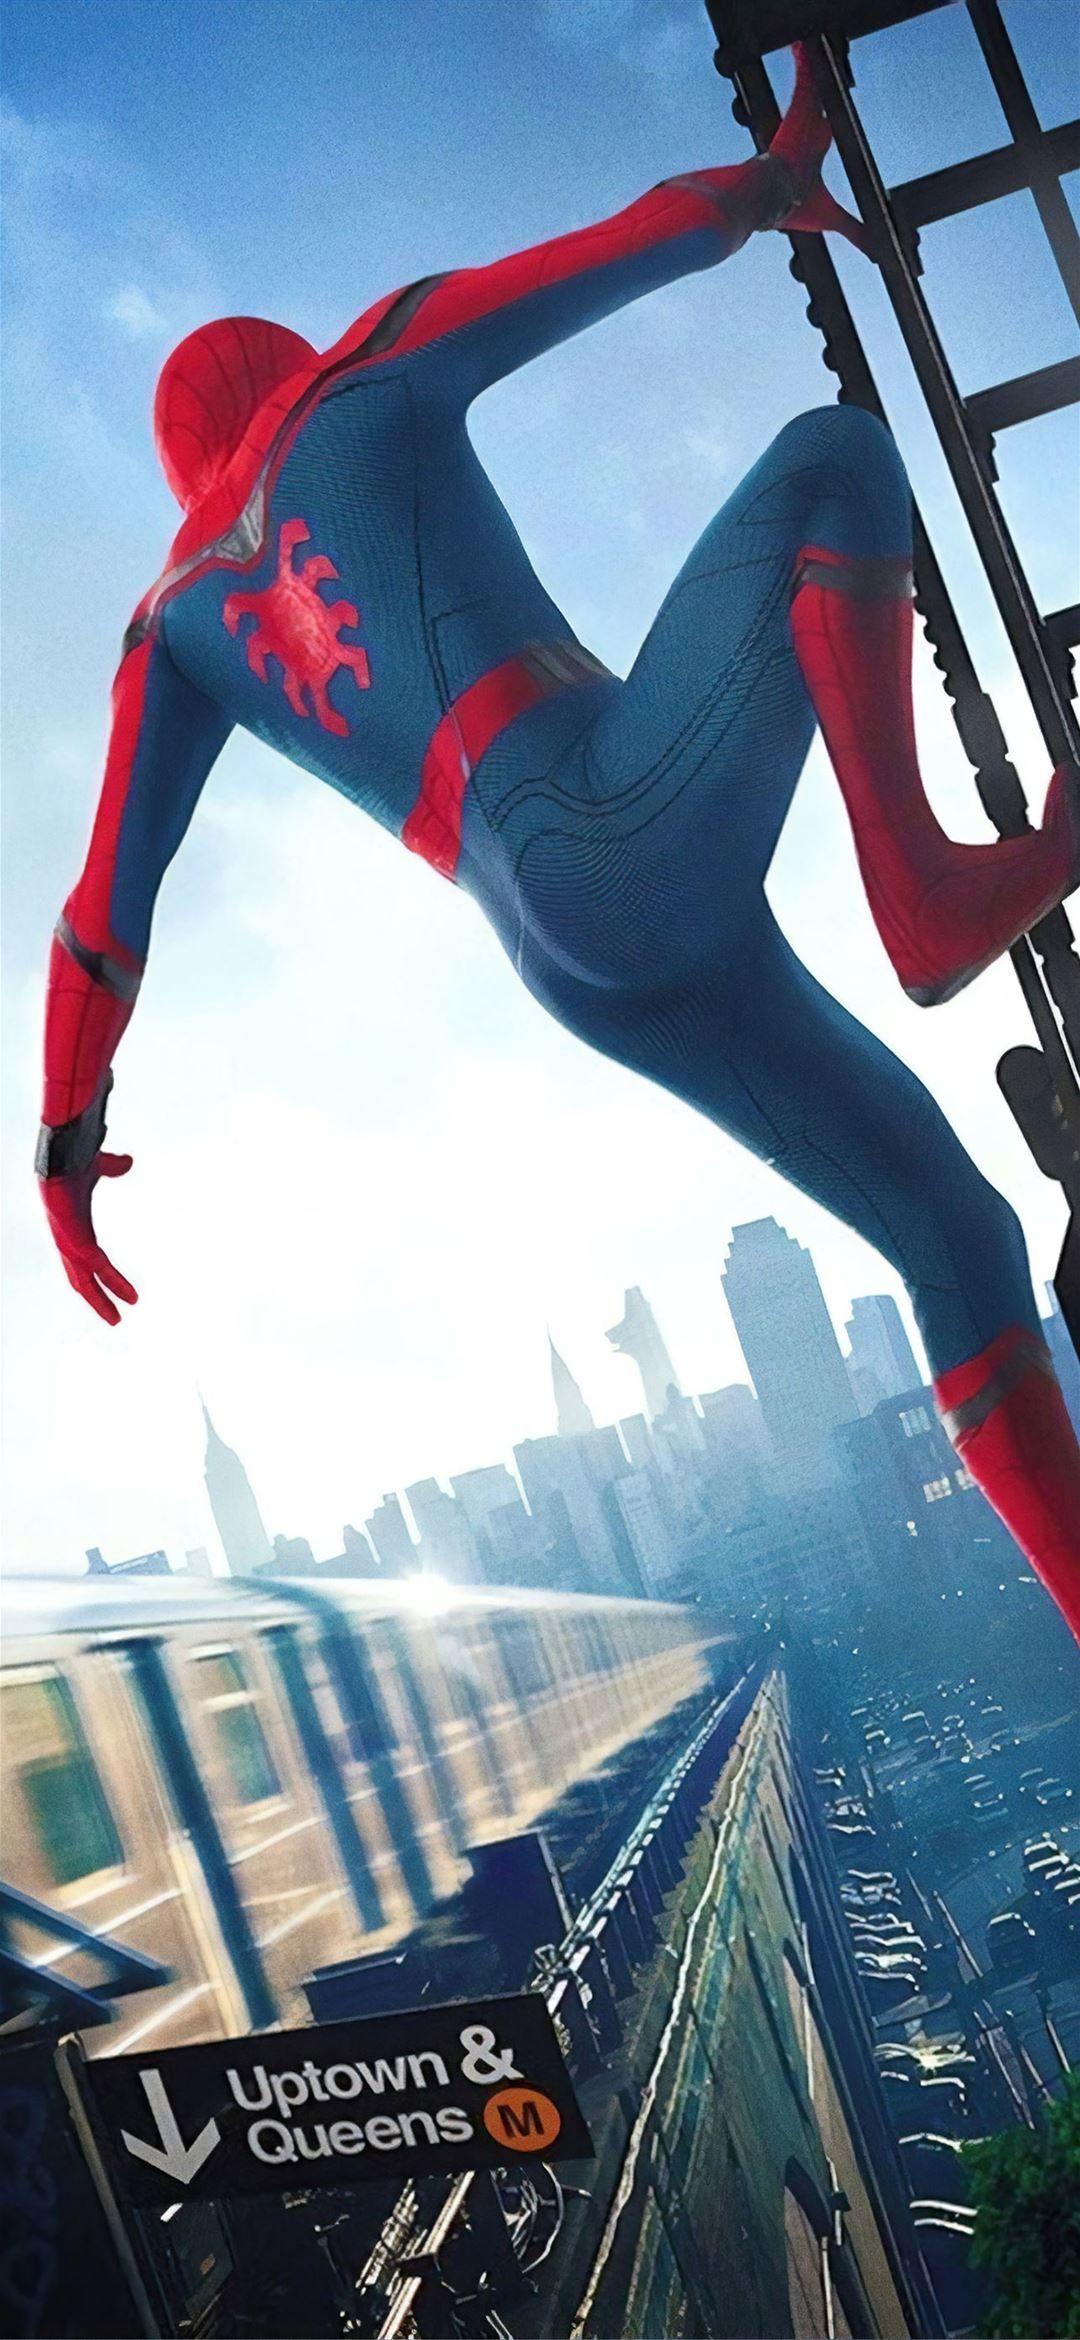 8k Spider Man Wallpapers Top Free 8k Spider Man Backgrounds